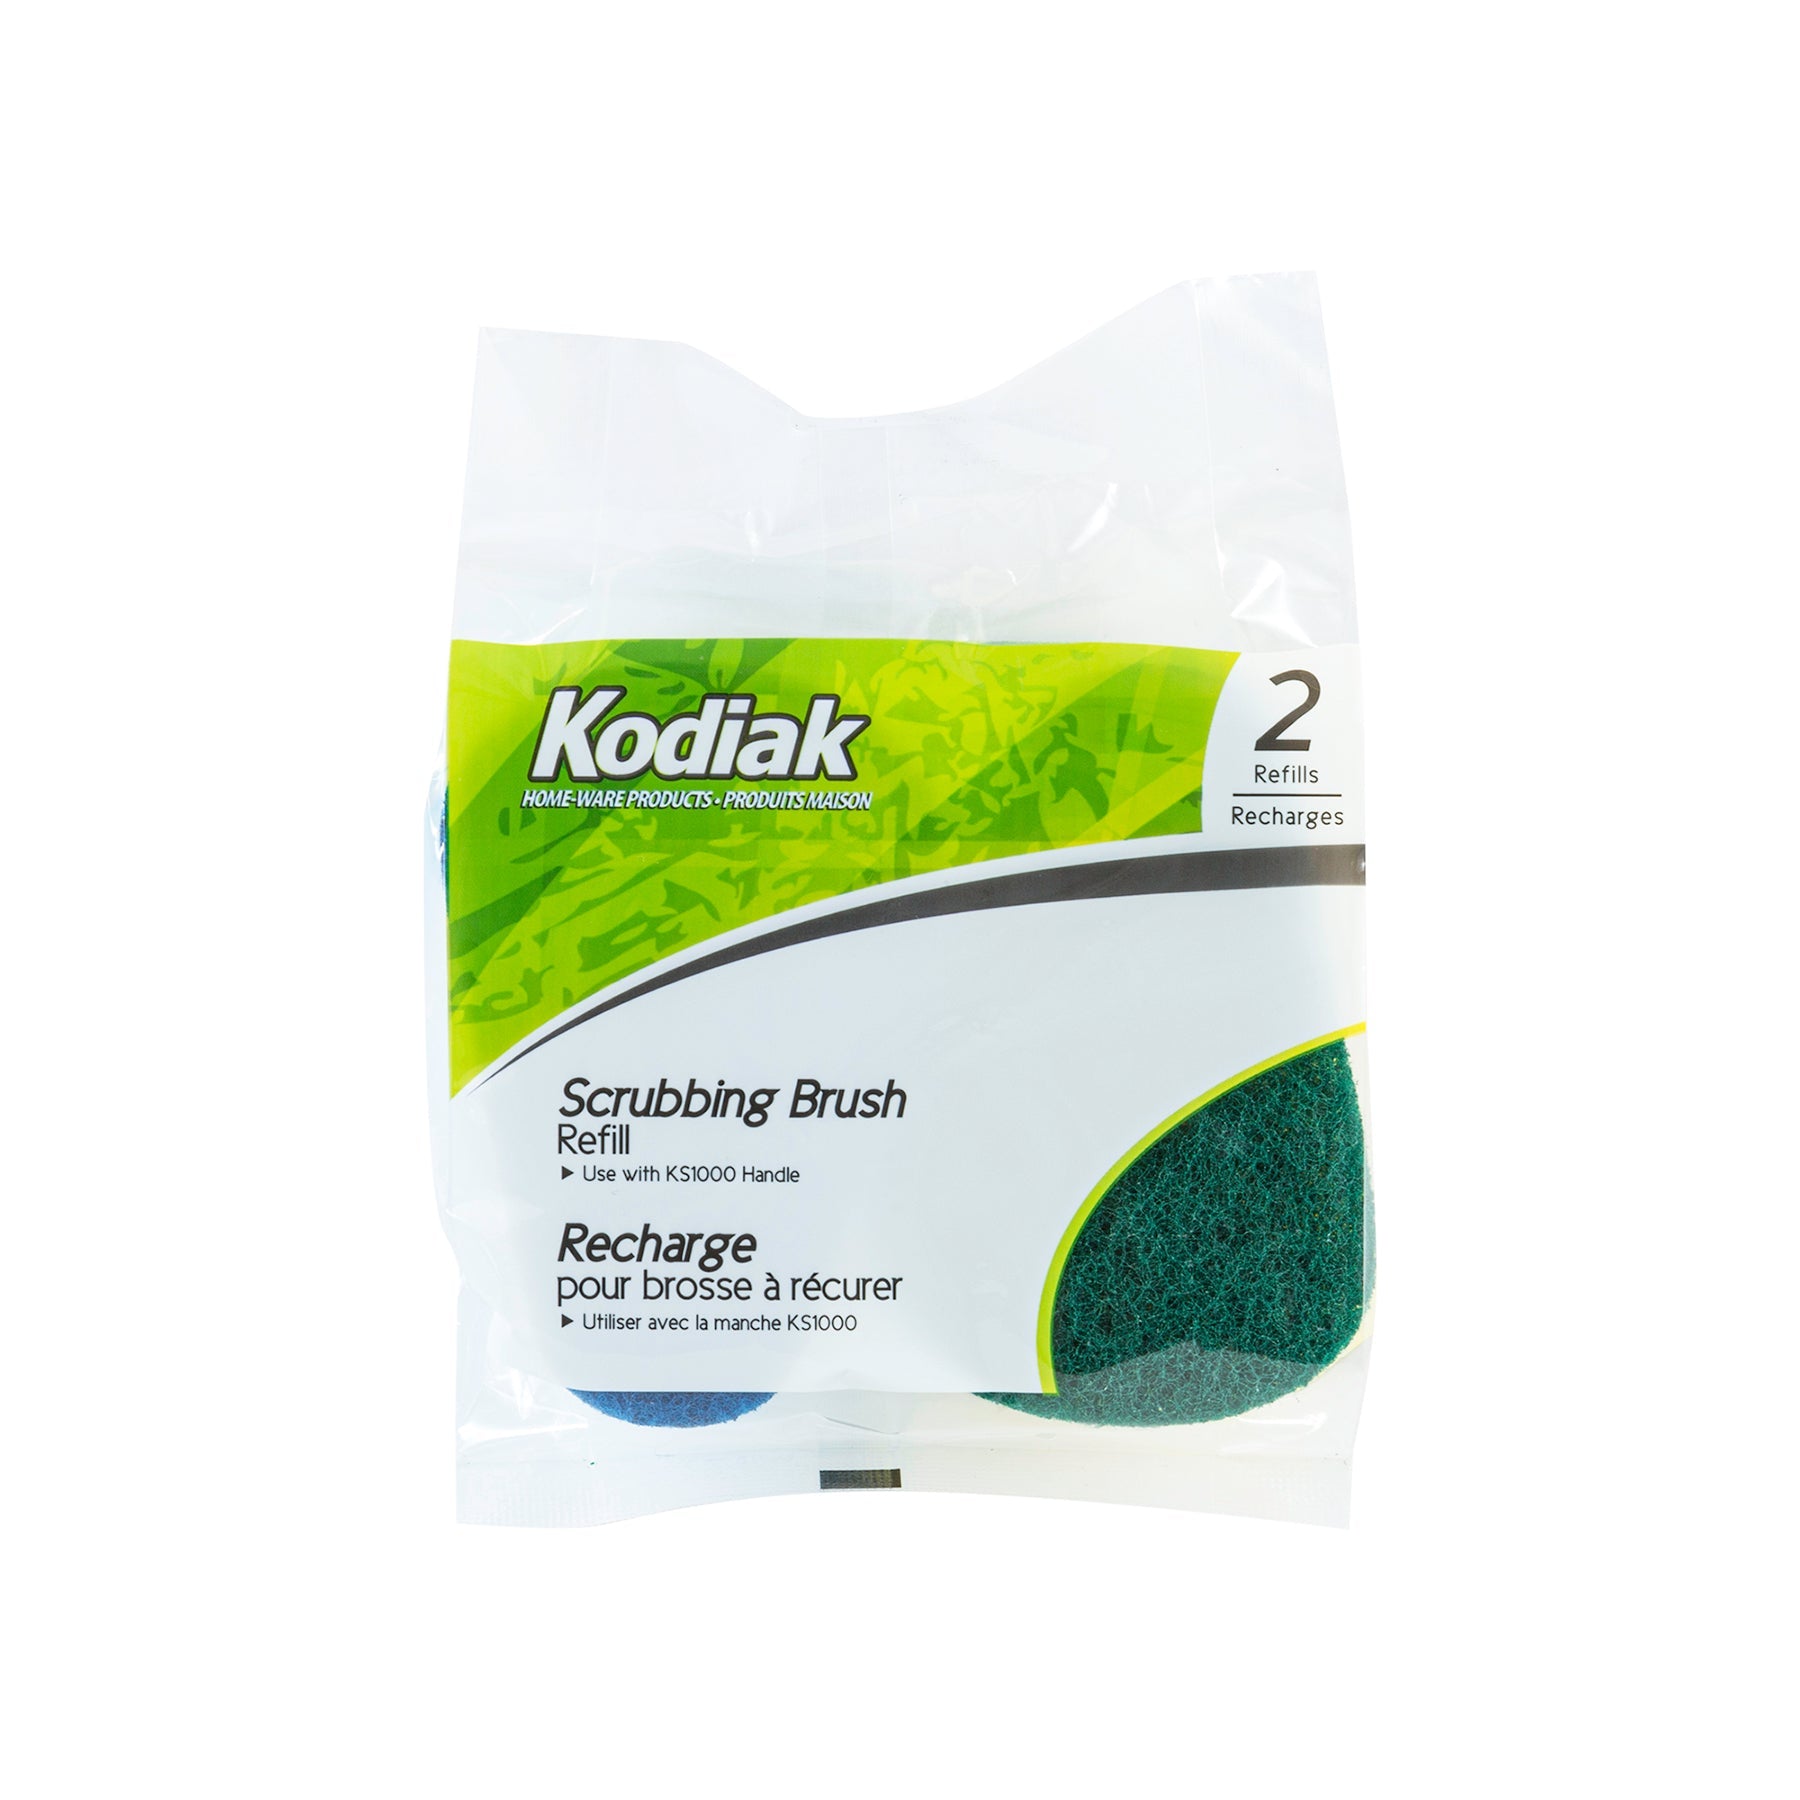 Kodiak 2 Refills for Scrubbing Brush 4in 